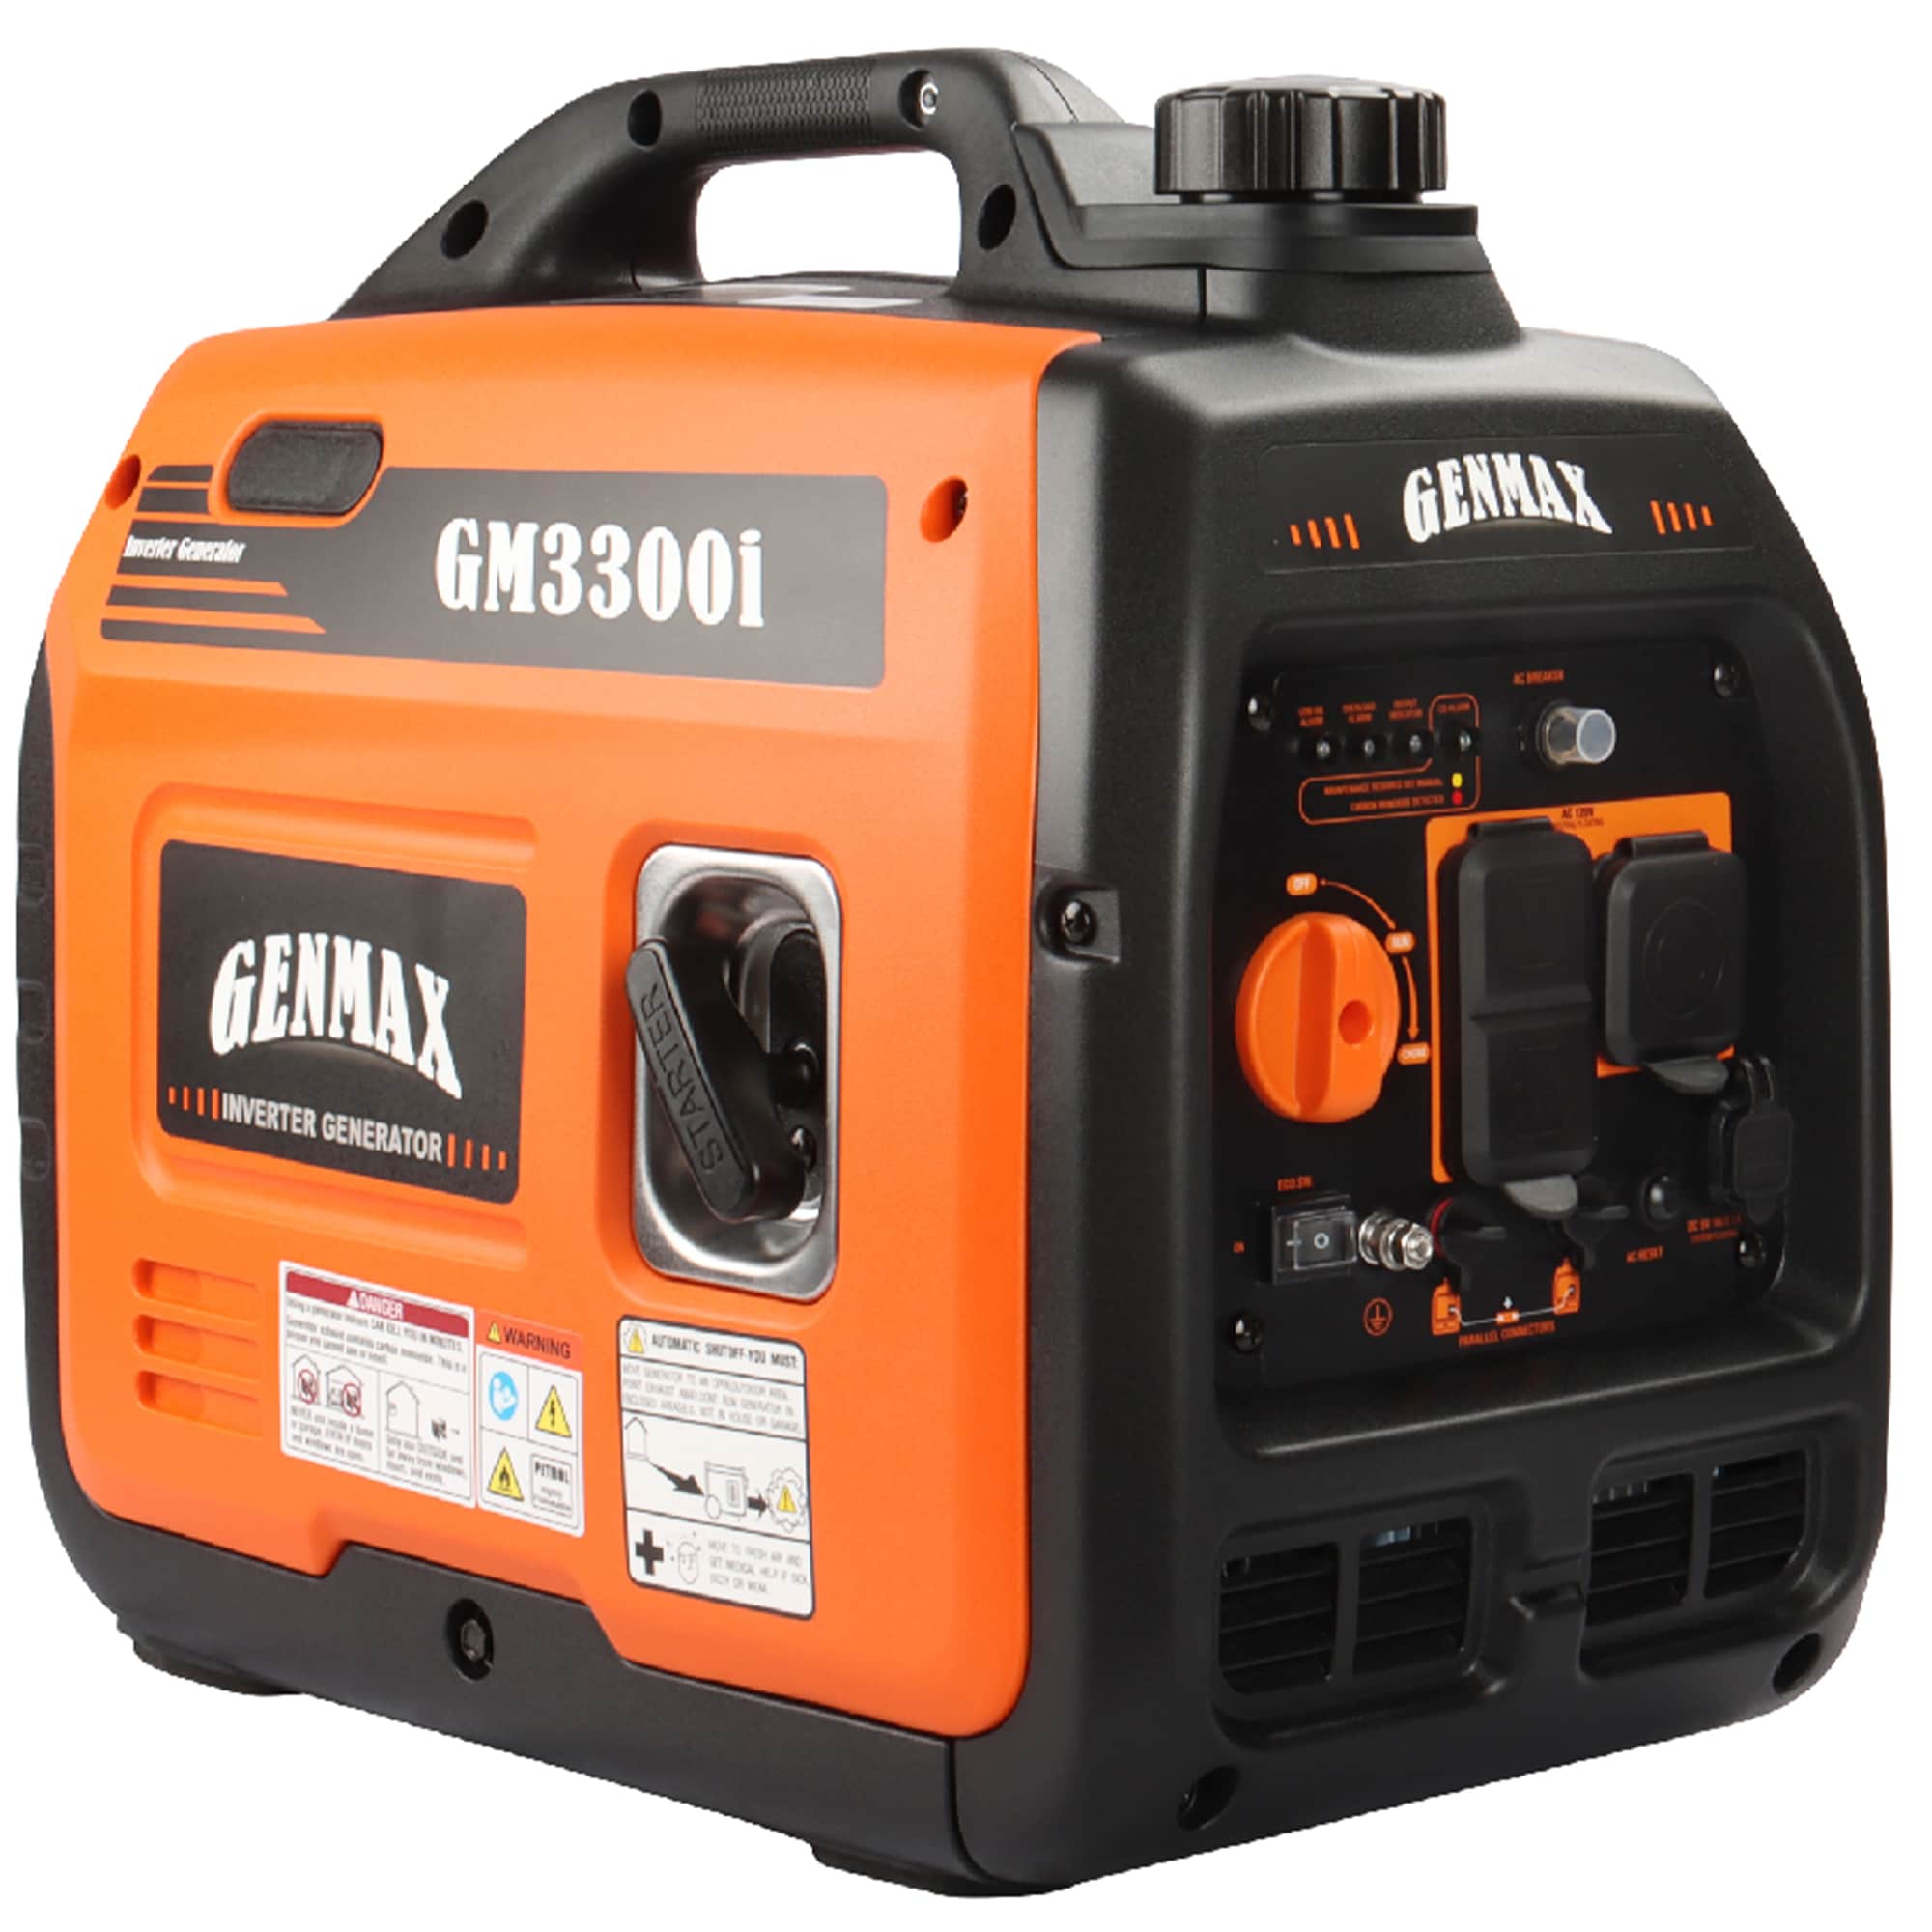 GENMAX Portable Gasoline Inverter Generator - 3000-Watt, Fuel